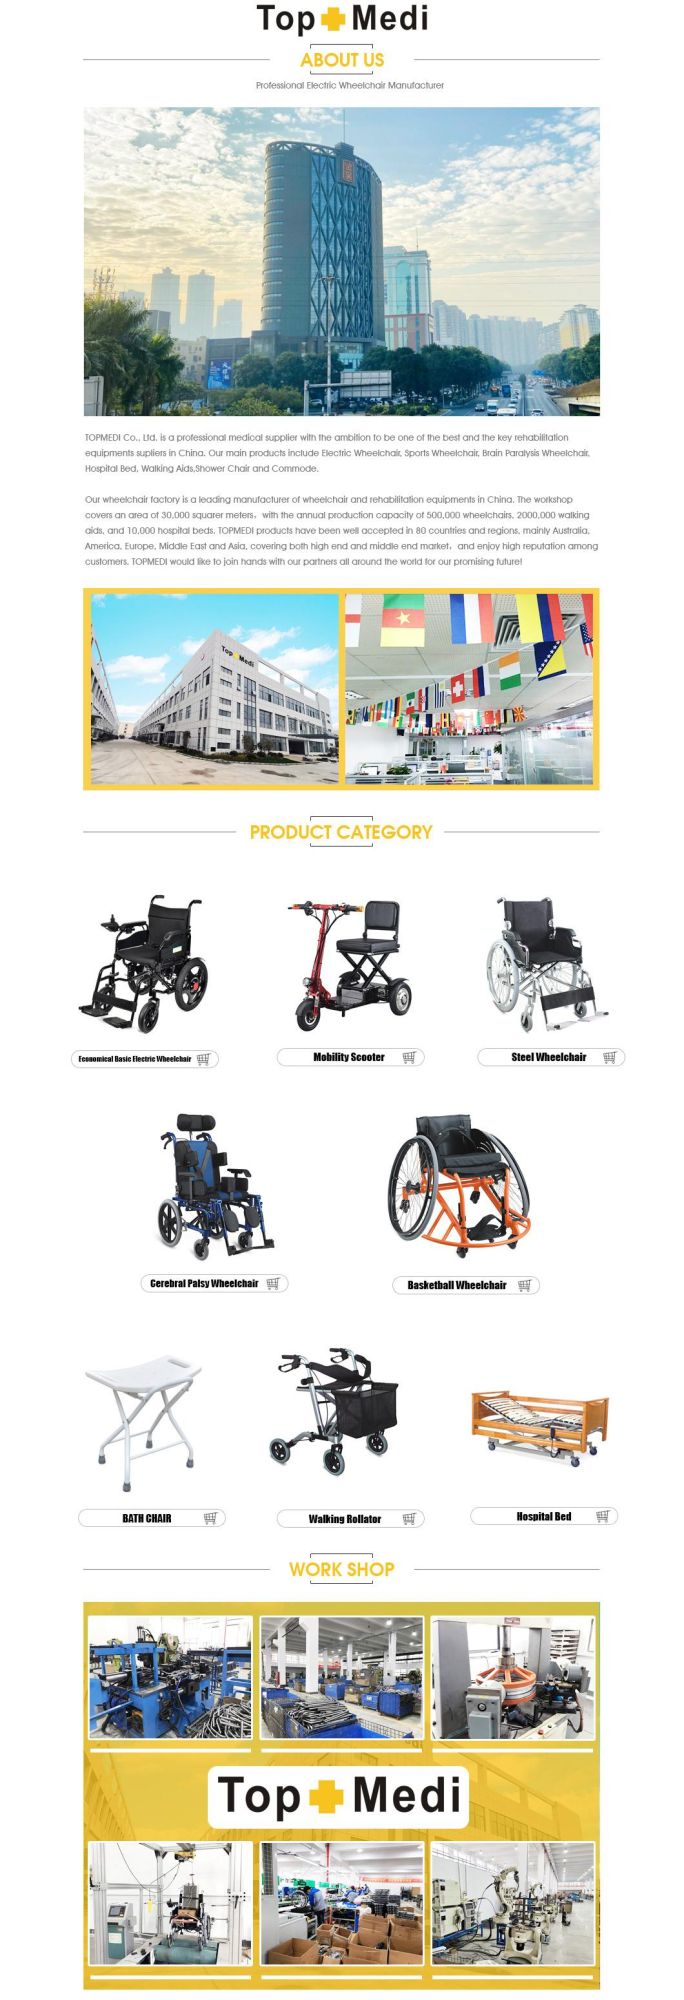 Rehabilitation Equipment Power Electric Wheelchair for Disable